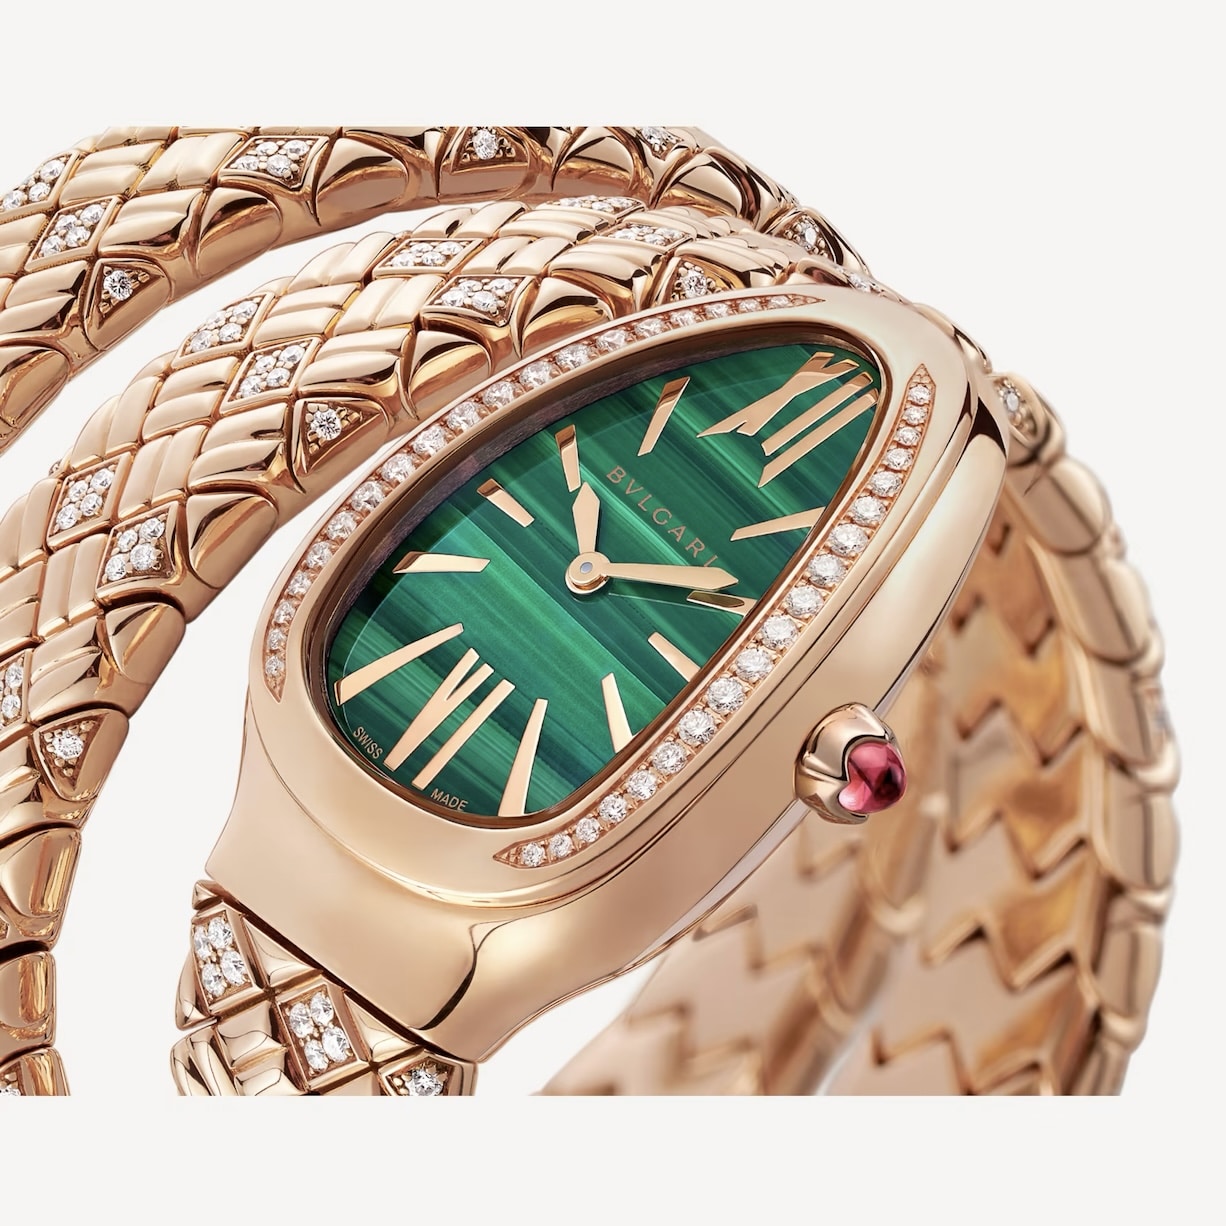 Bvlgari Serpenti Spiga Watch | The Luxury Flavor